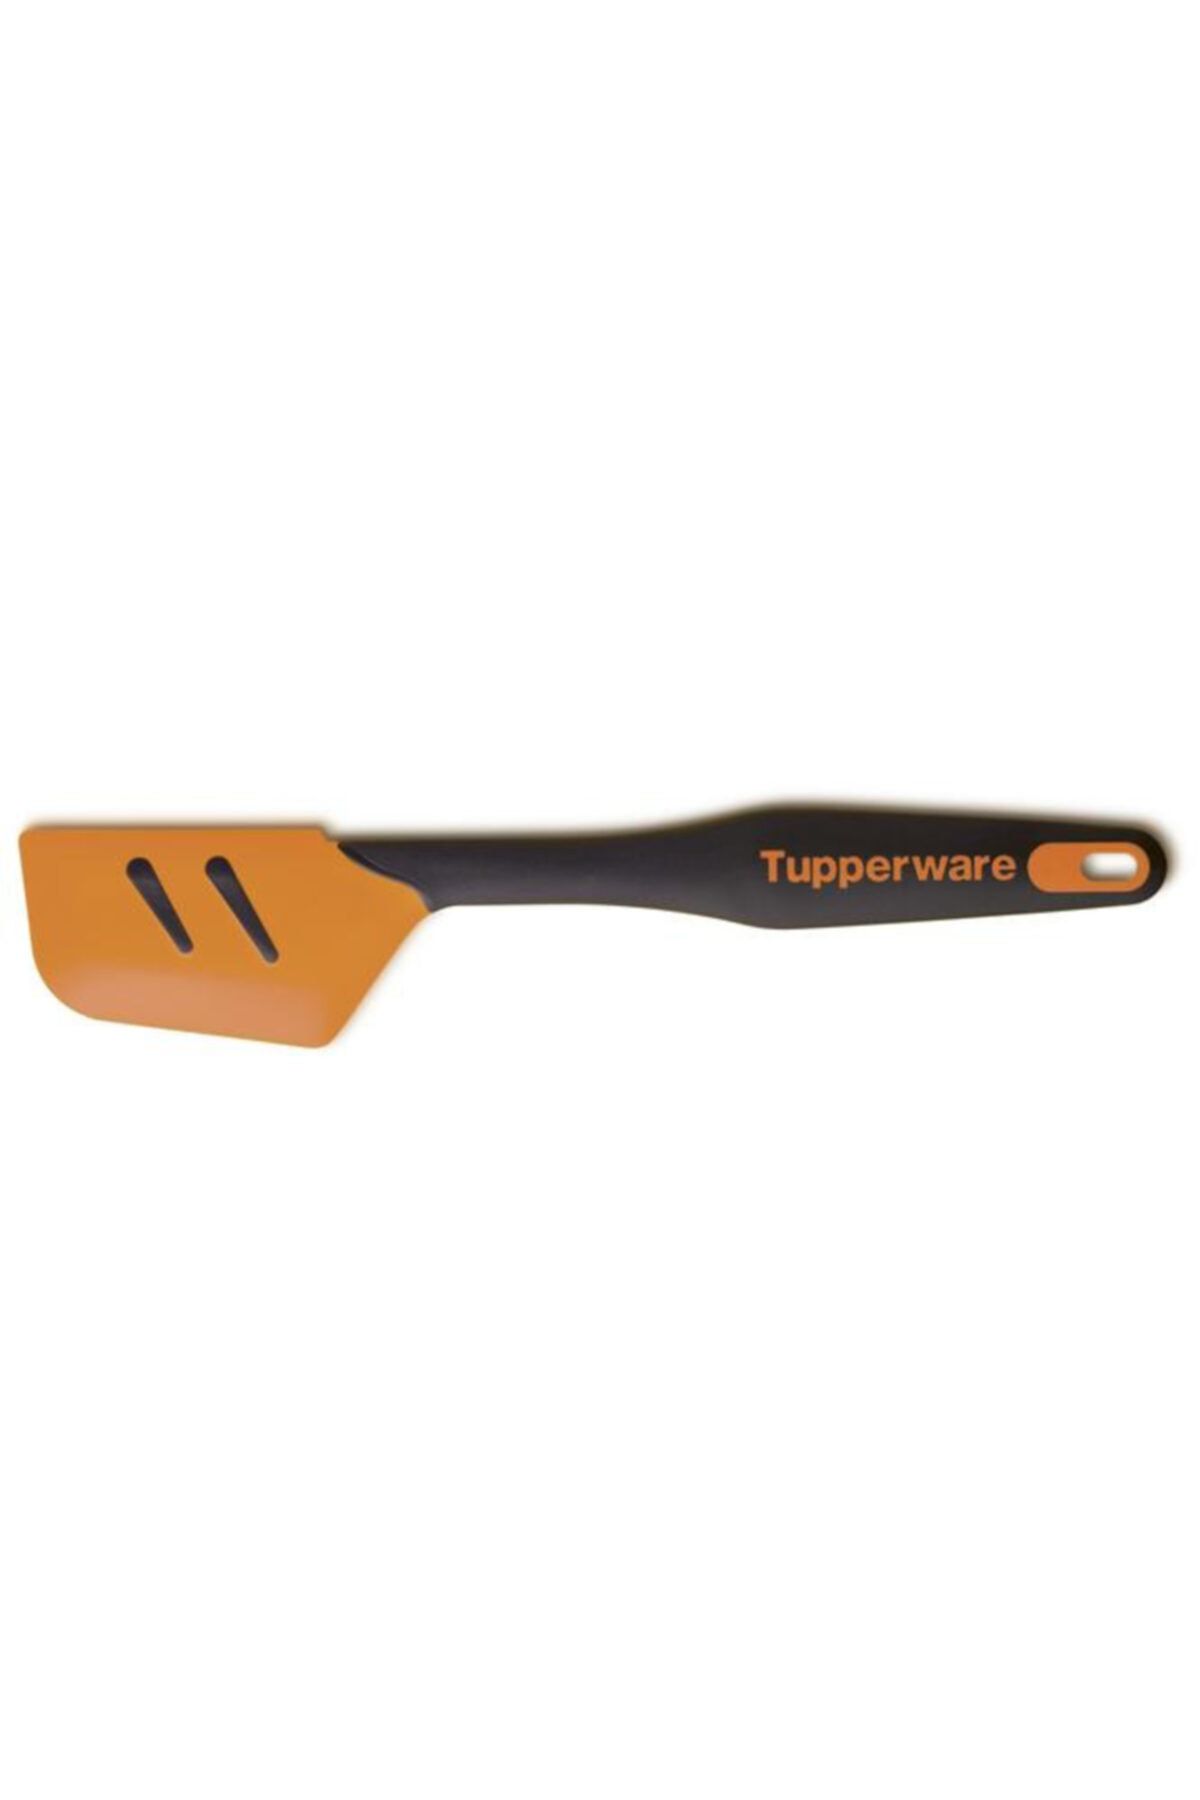 Tupperware Silikon Spatula